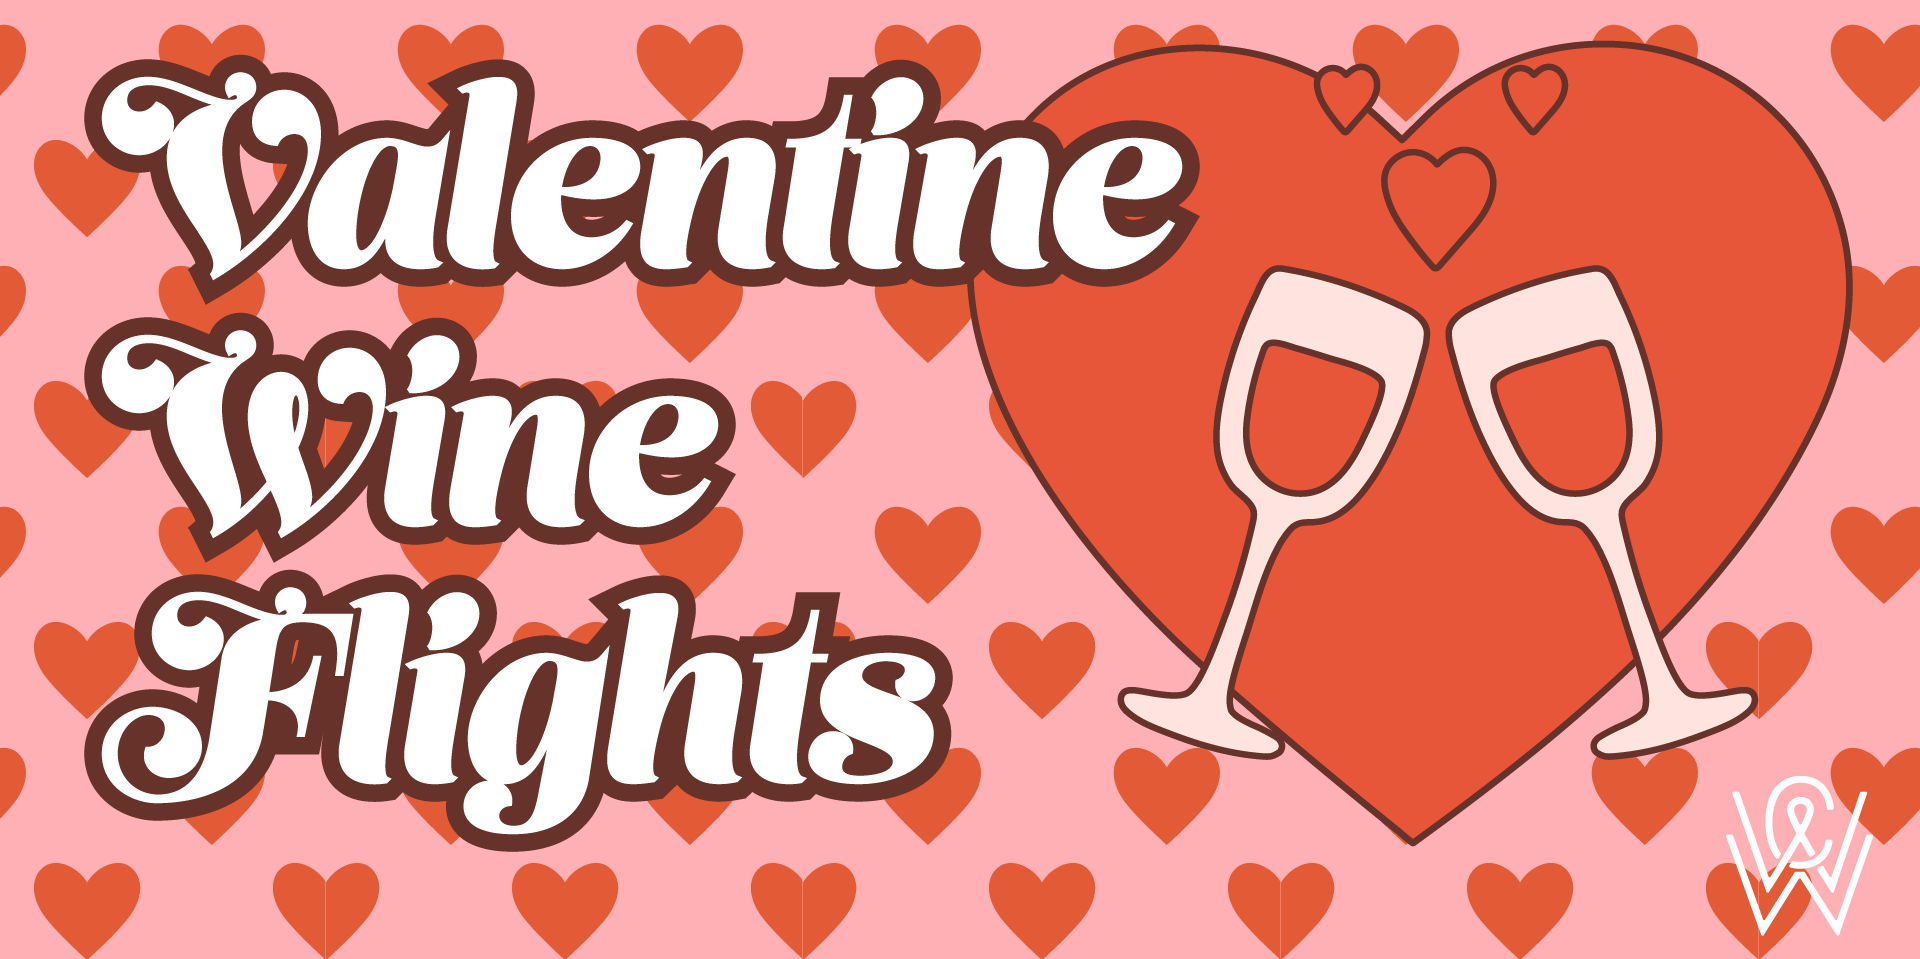 Valentine Wine Flights promotional image